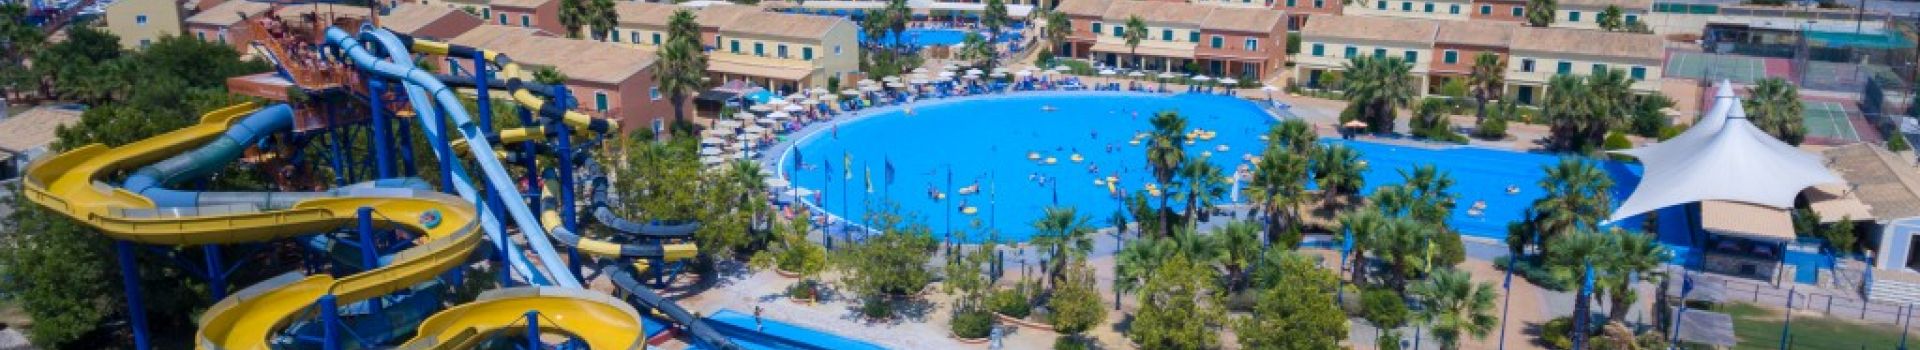 3 share offers Aqualand Resort